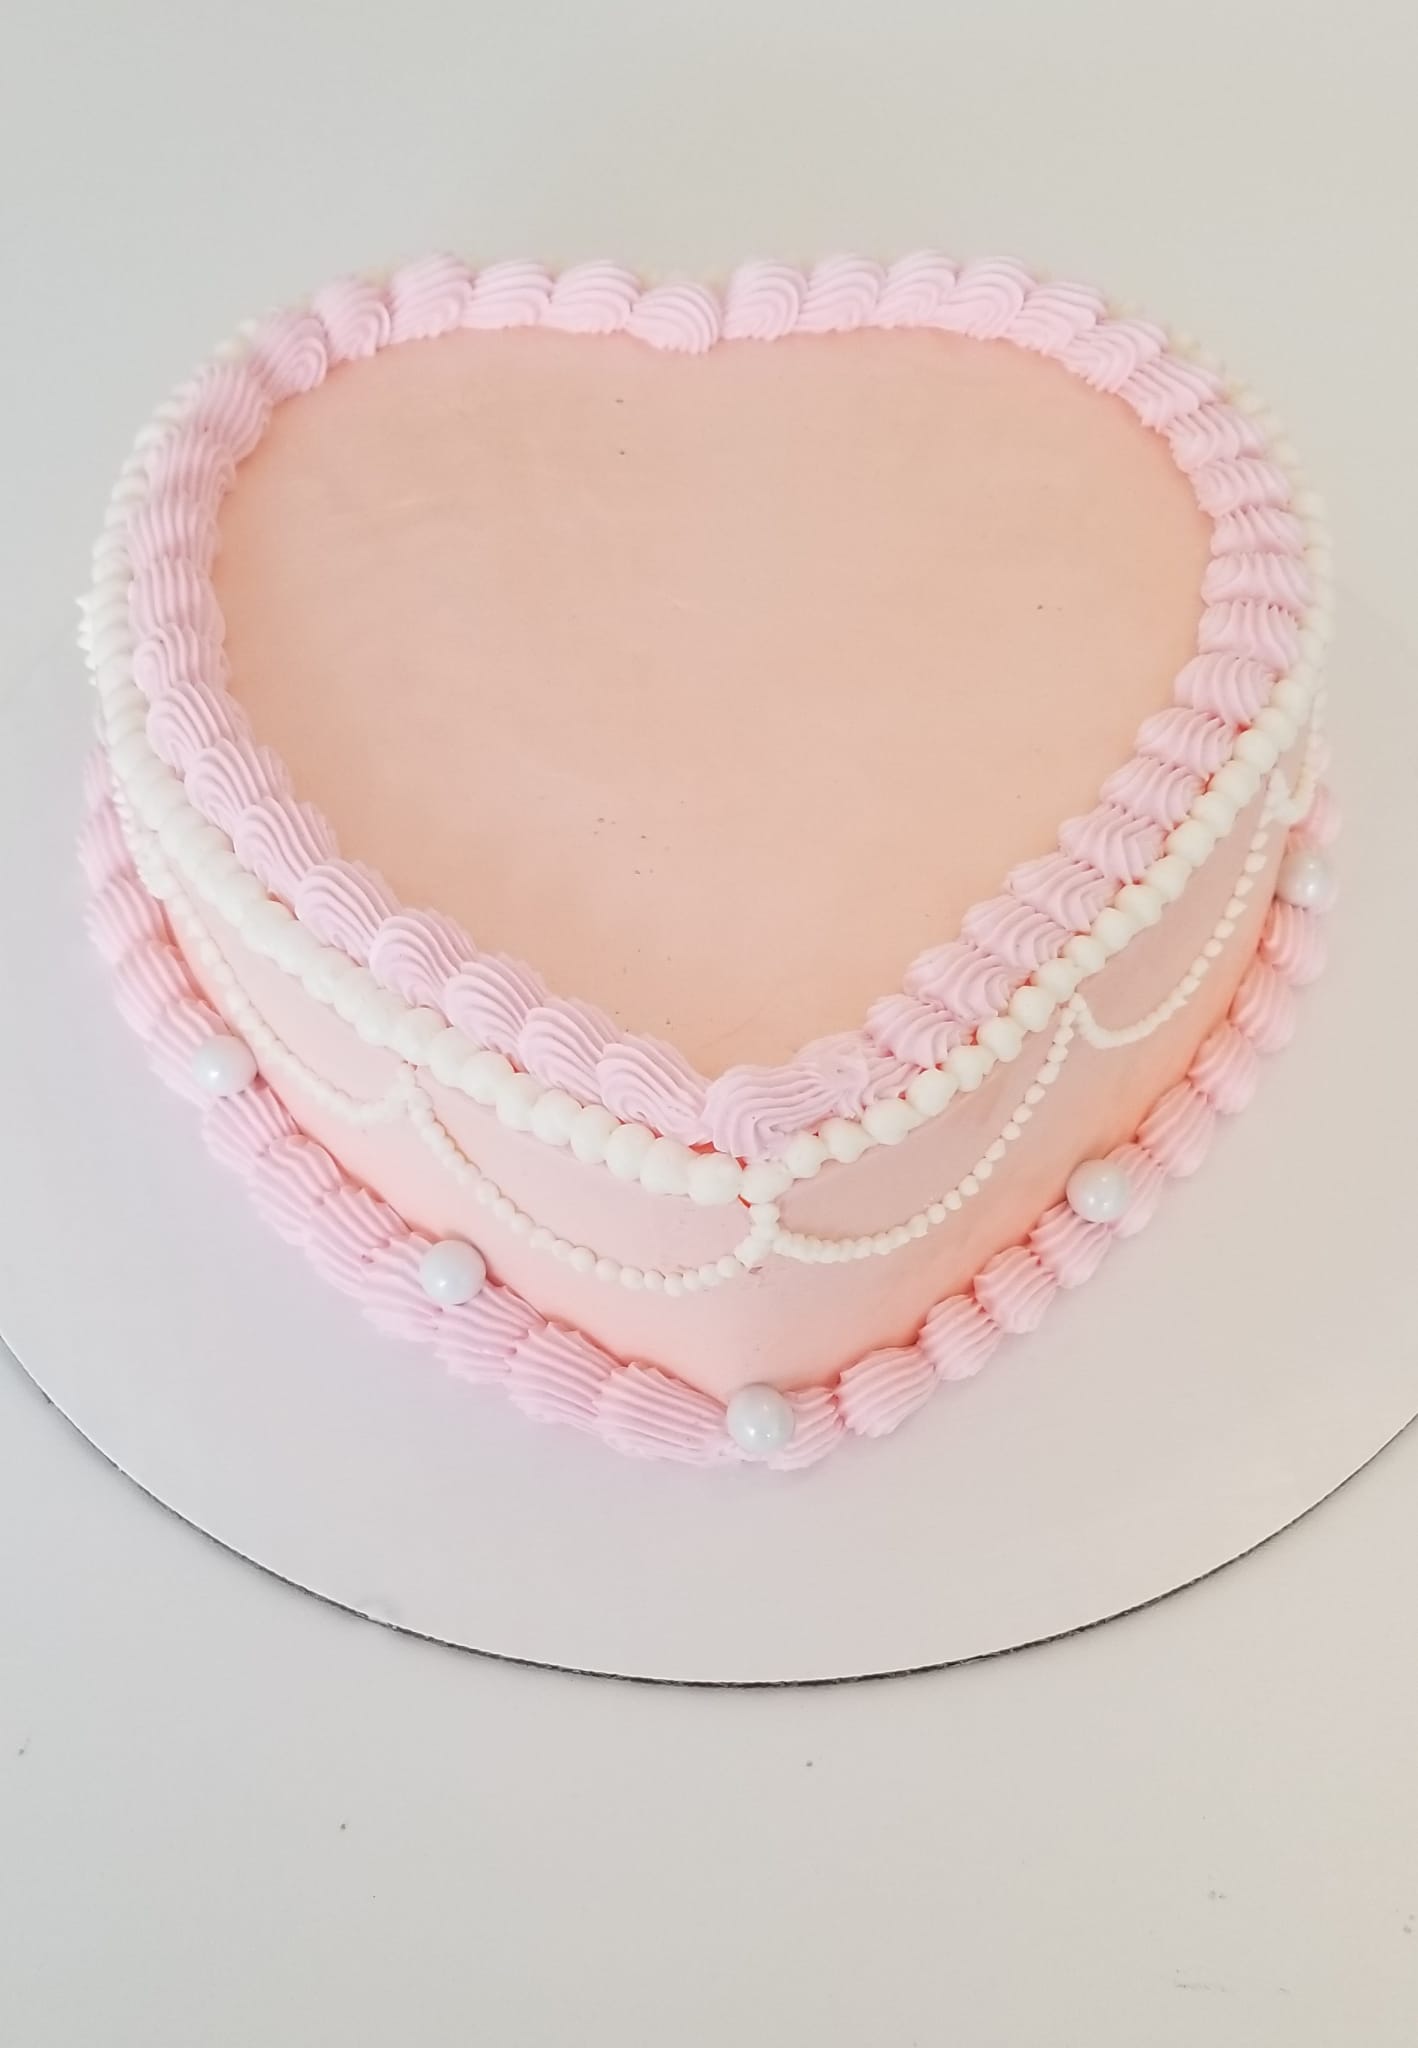 Premium PSD | Delicious heart shape cake mockup design